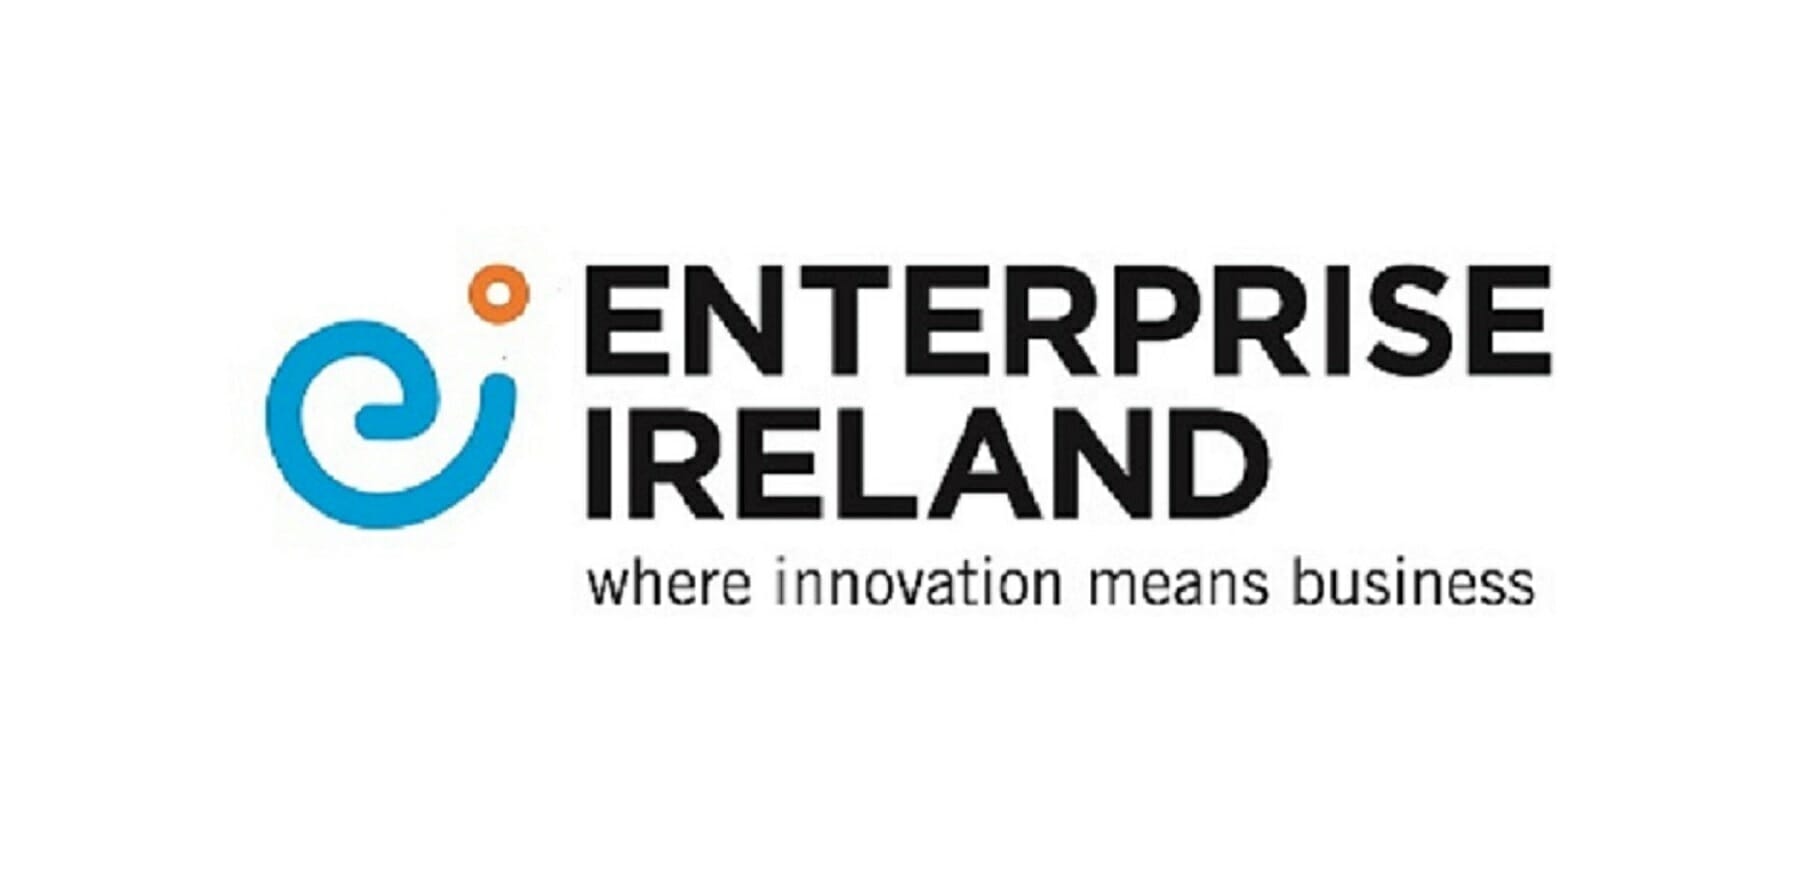 Enterprise Ireland supports over 80,000 UK jobs[1] @Entirl